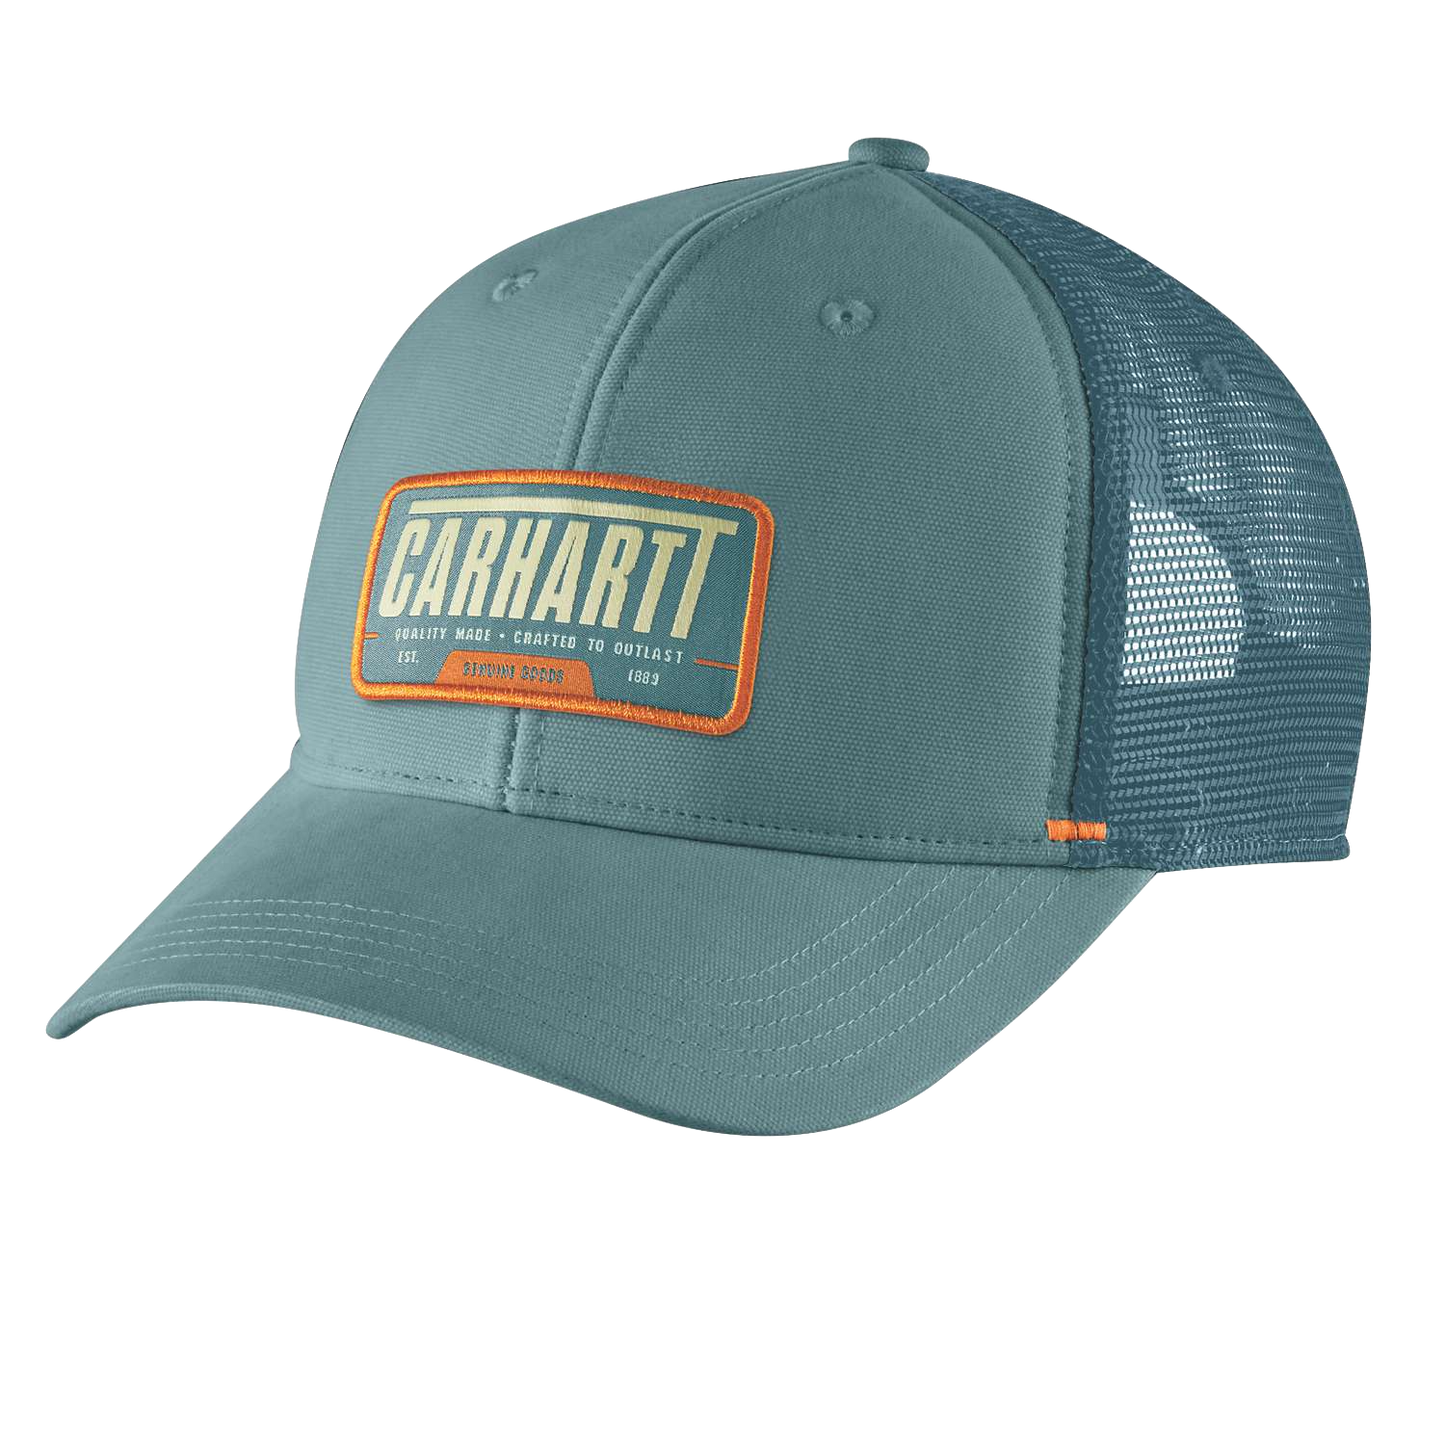 Carhartt Canvas Mesh-Back Core Graphic Cap Trucker Hat 105971